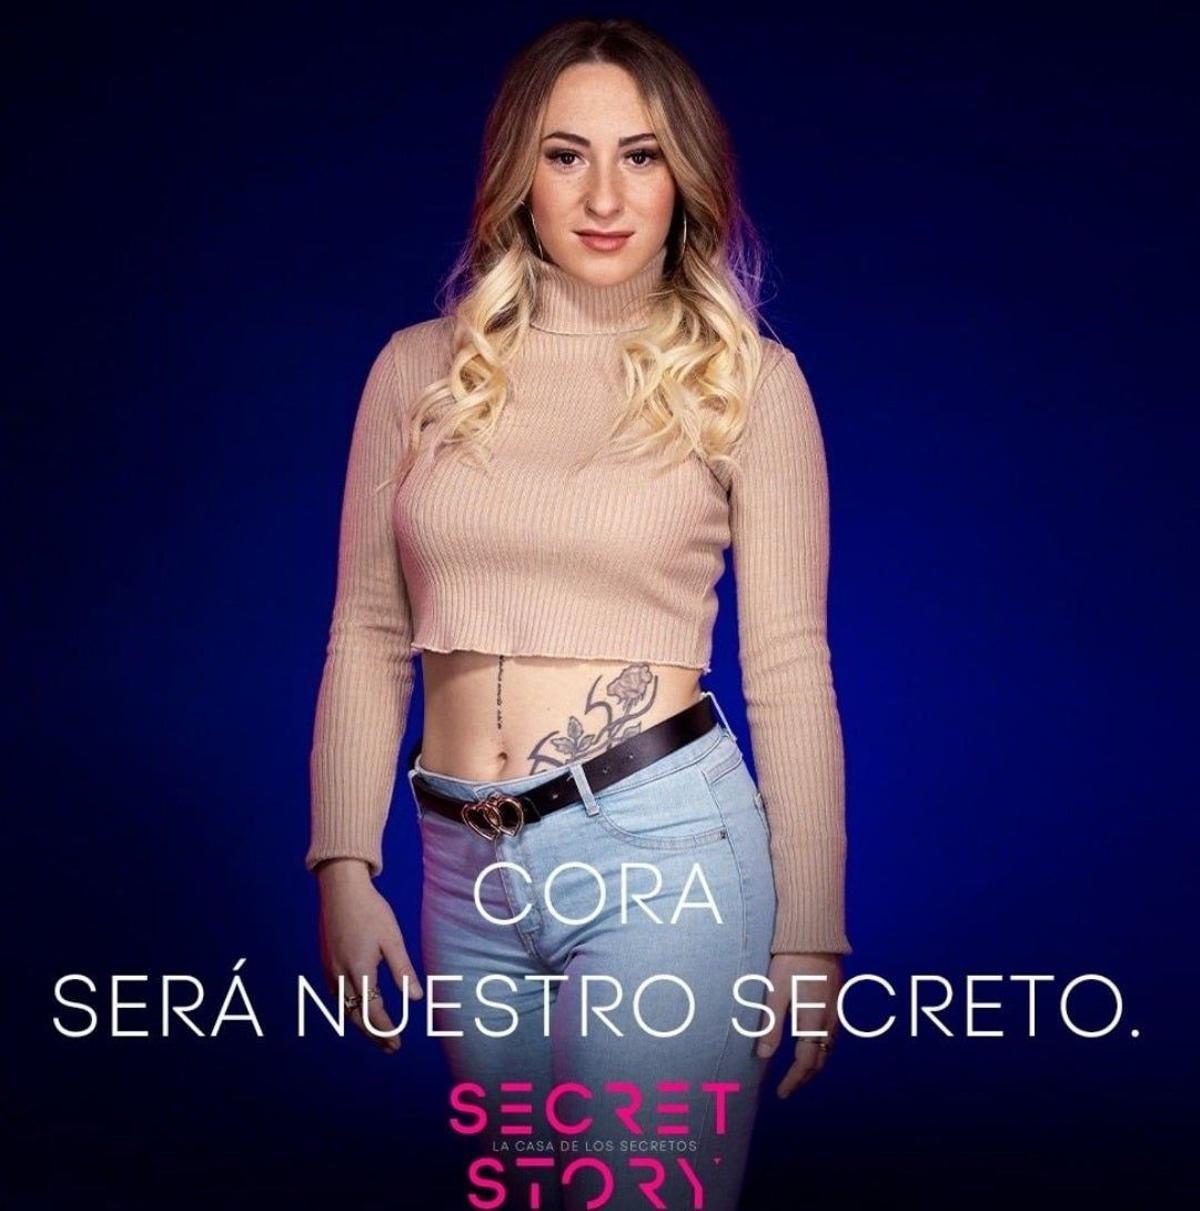 'Secret Story': Cora será nuestro secreto